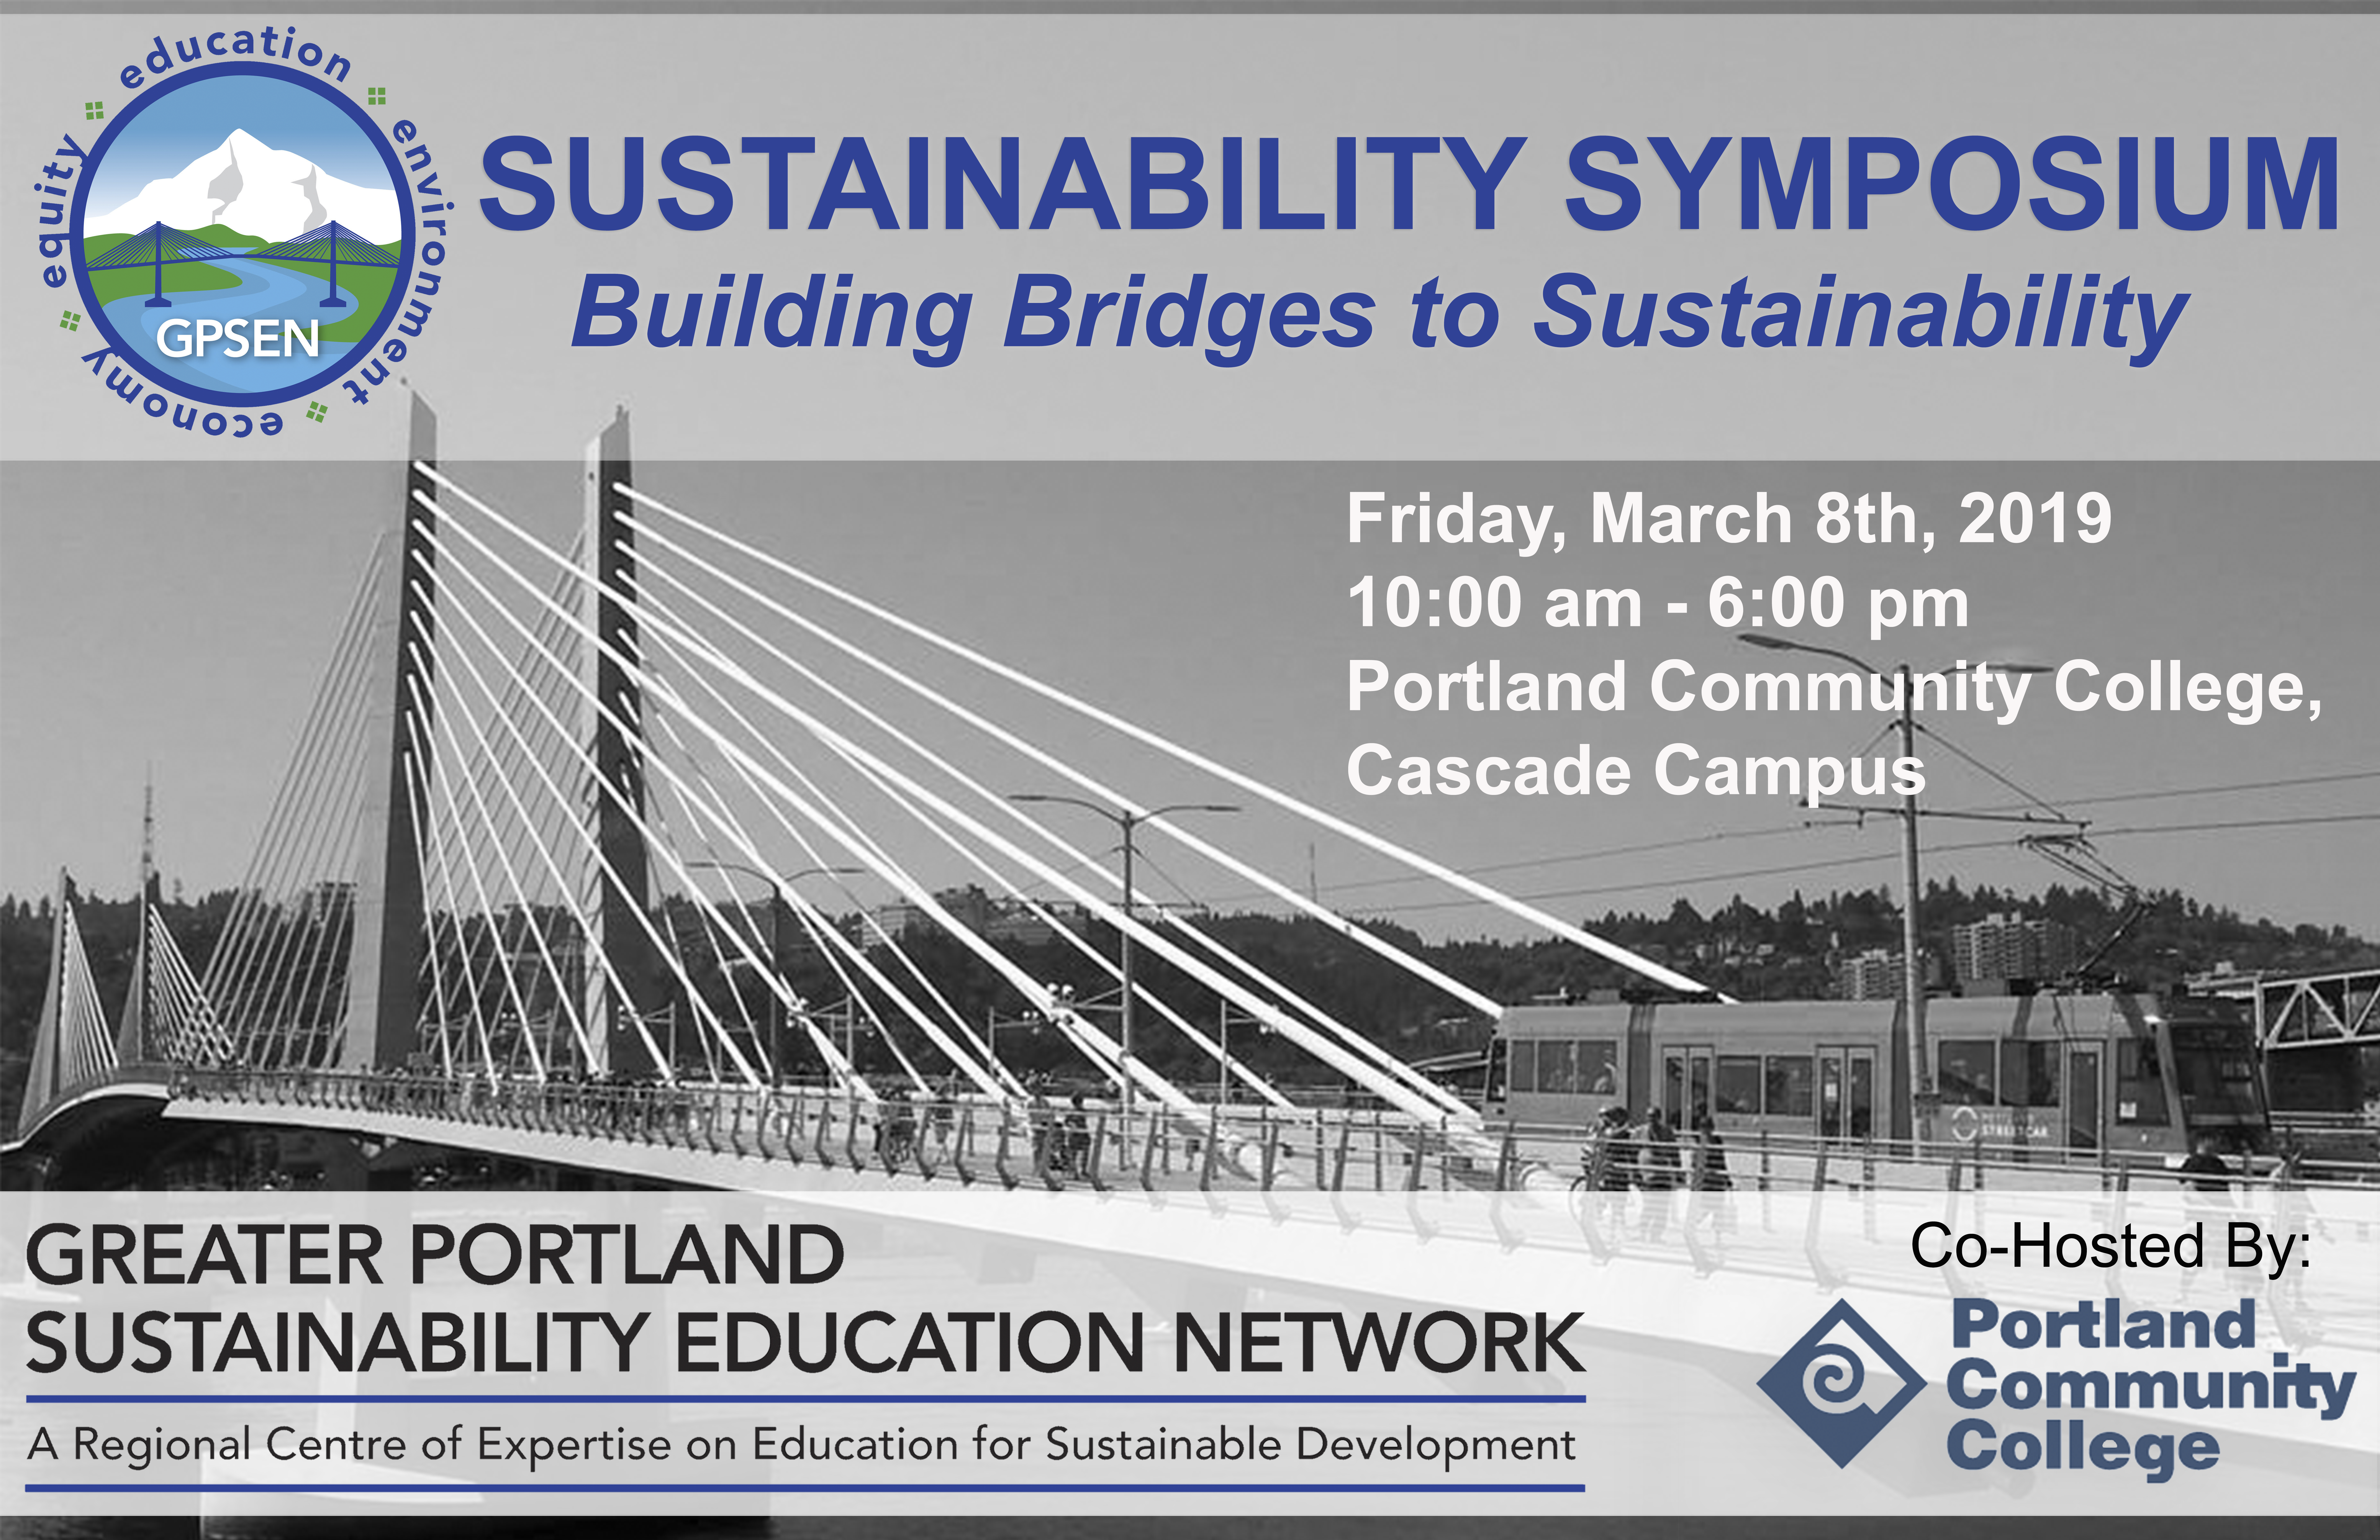 GPSEN Sustainability Symposium ~ RCE Greater Portland